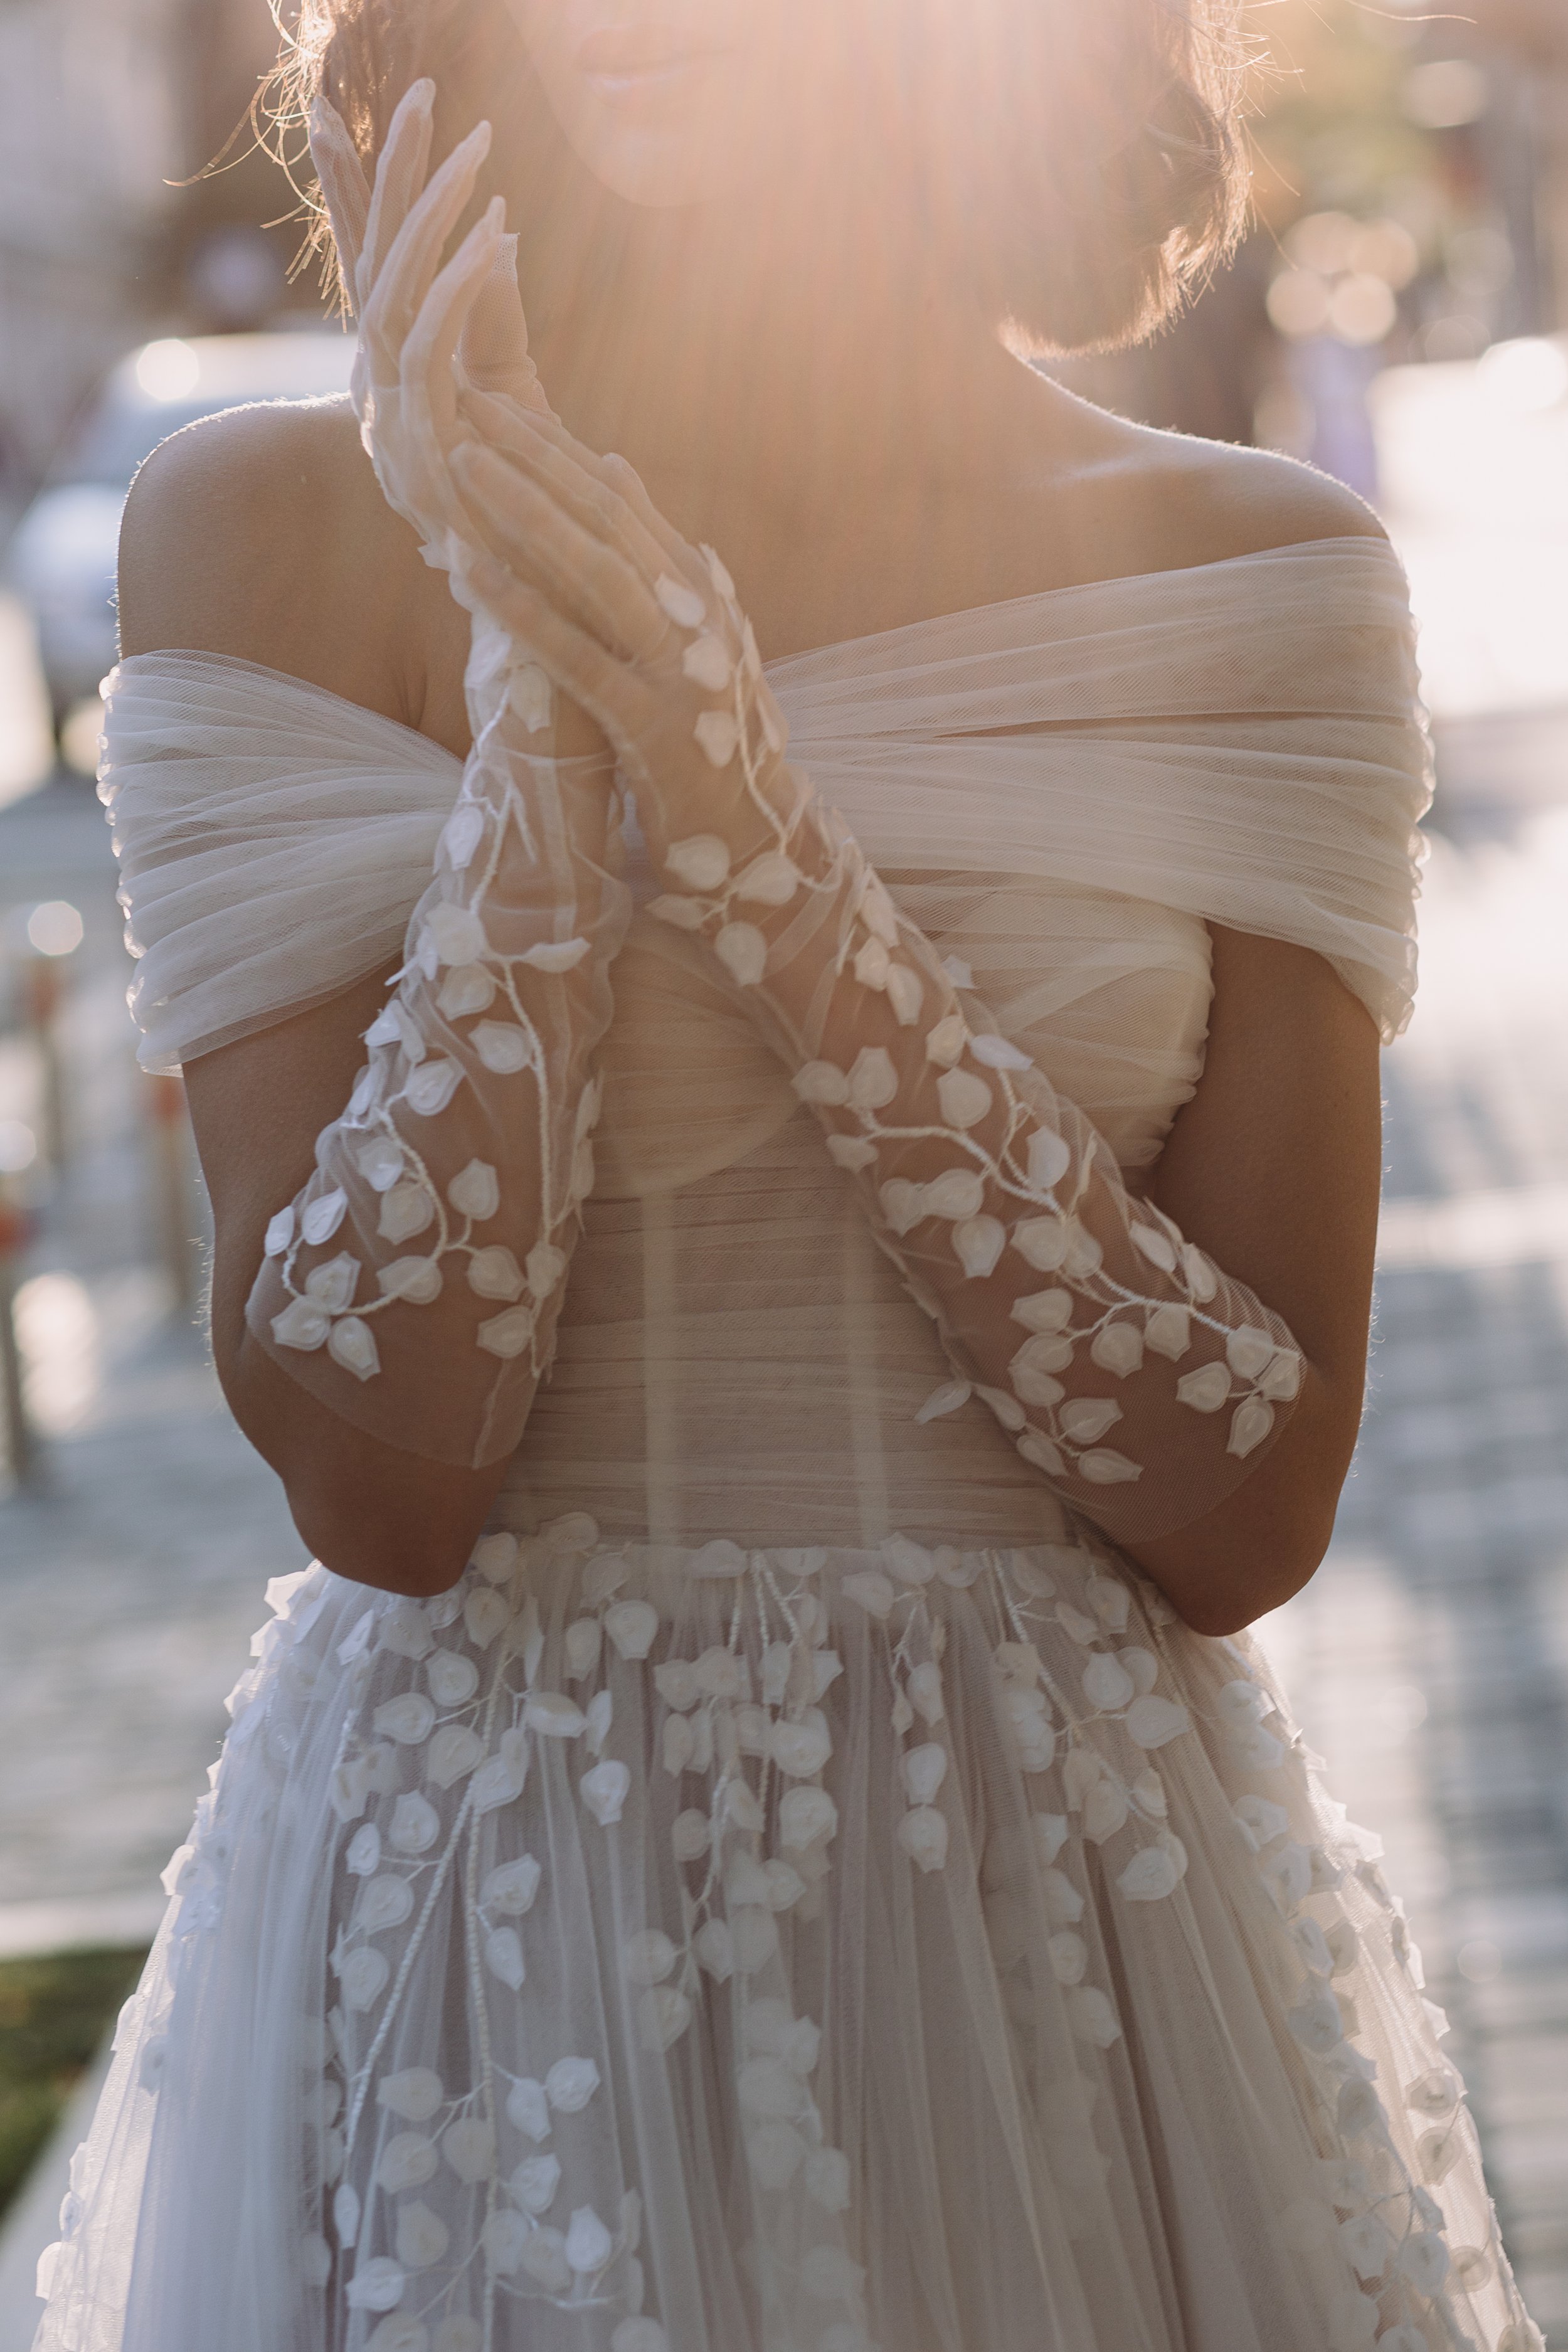 blanc-de-blanc-bridal-boutique-cleveland-dress-wedding-gown-esty-style-olive..jpg